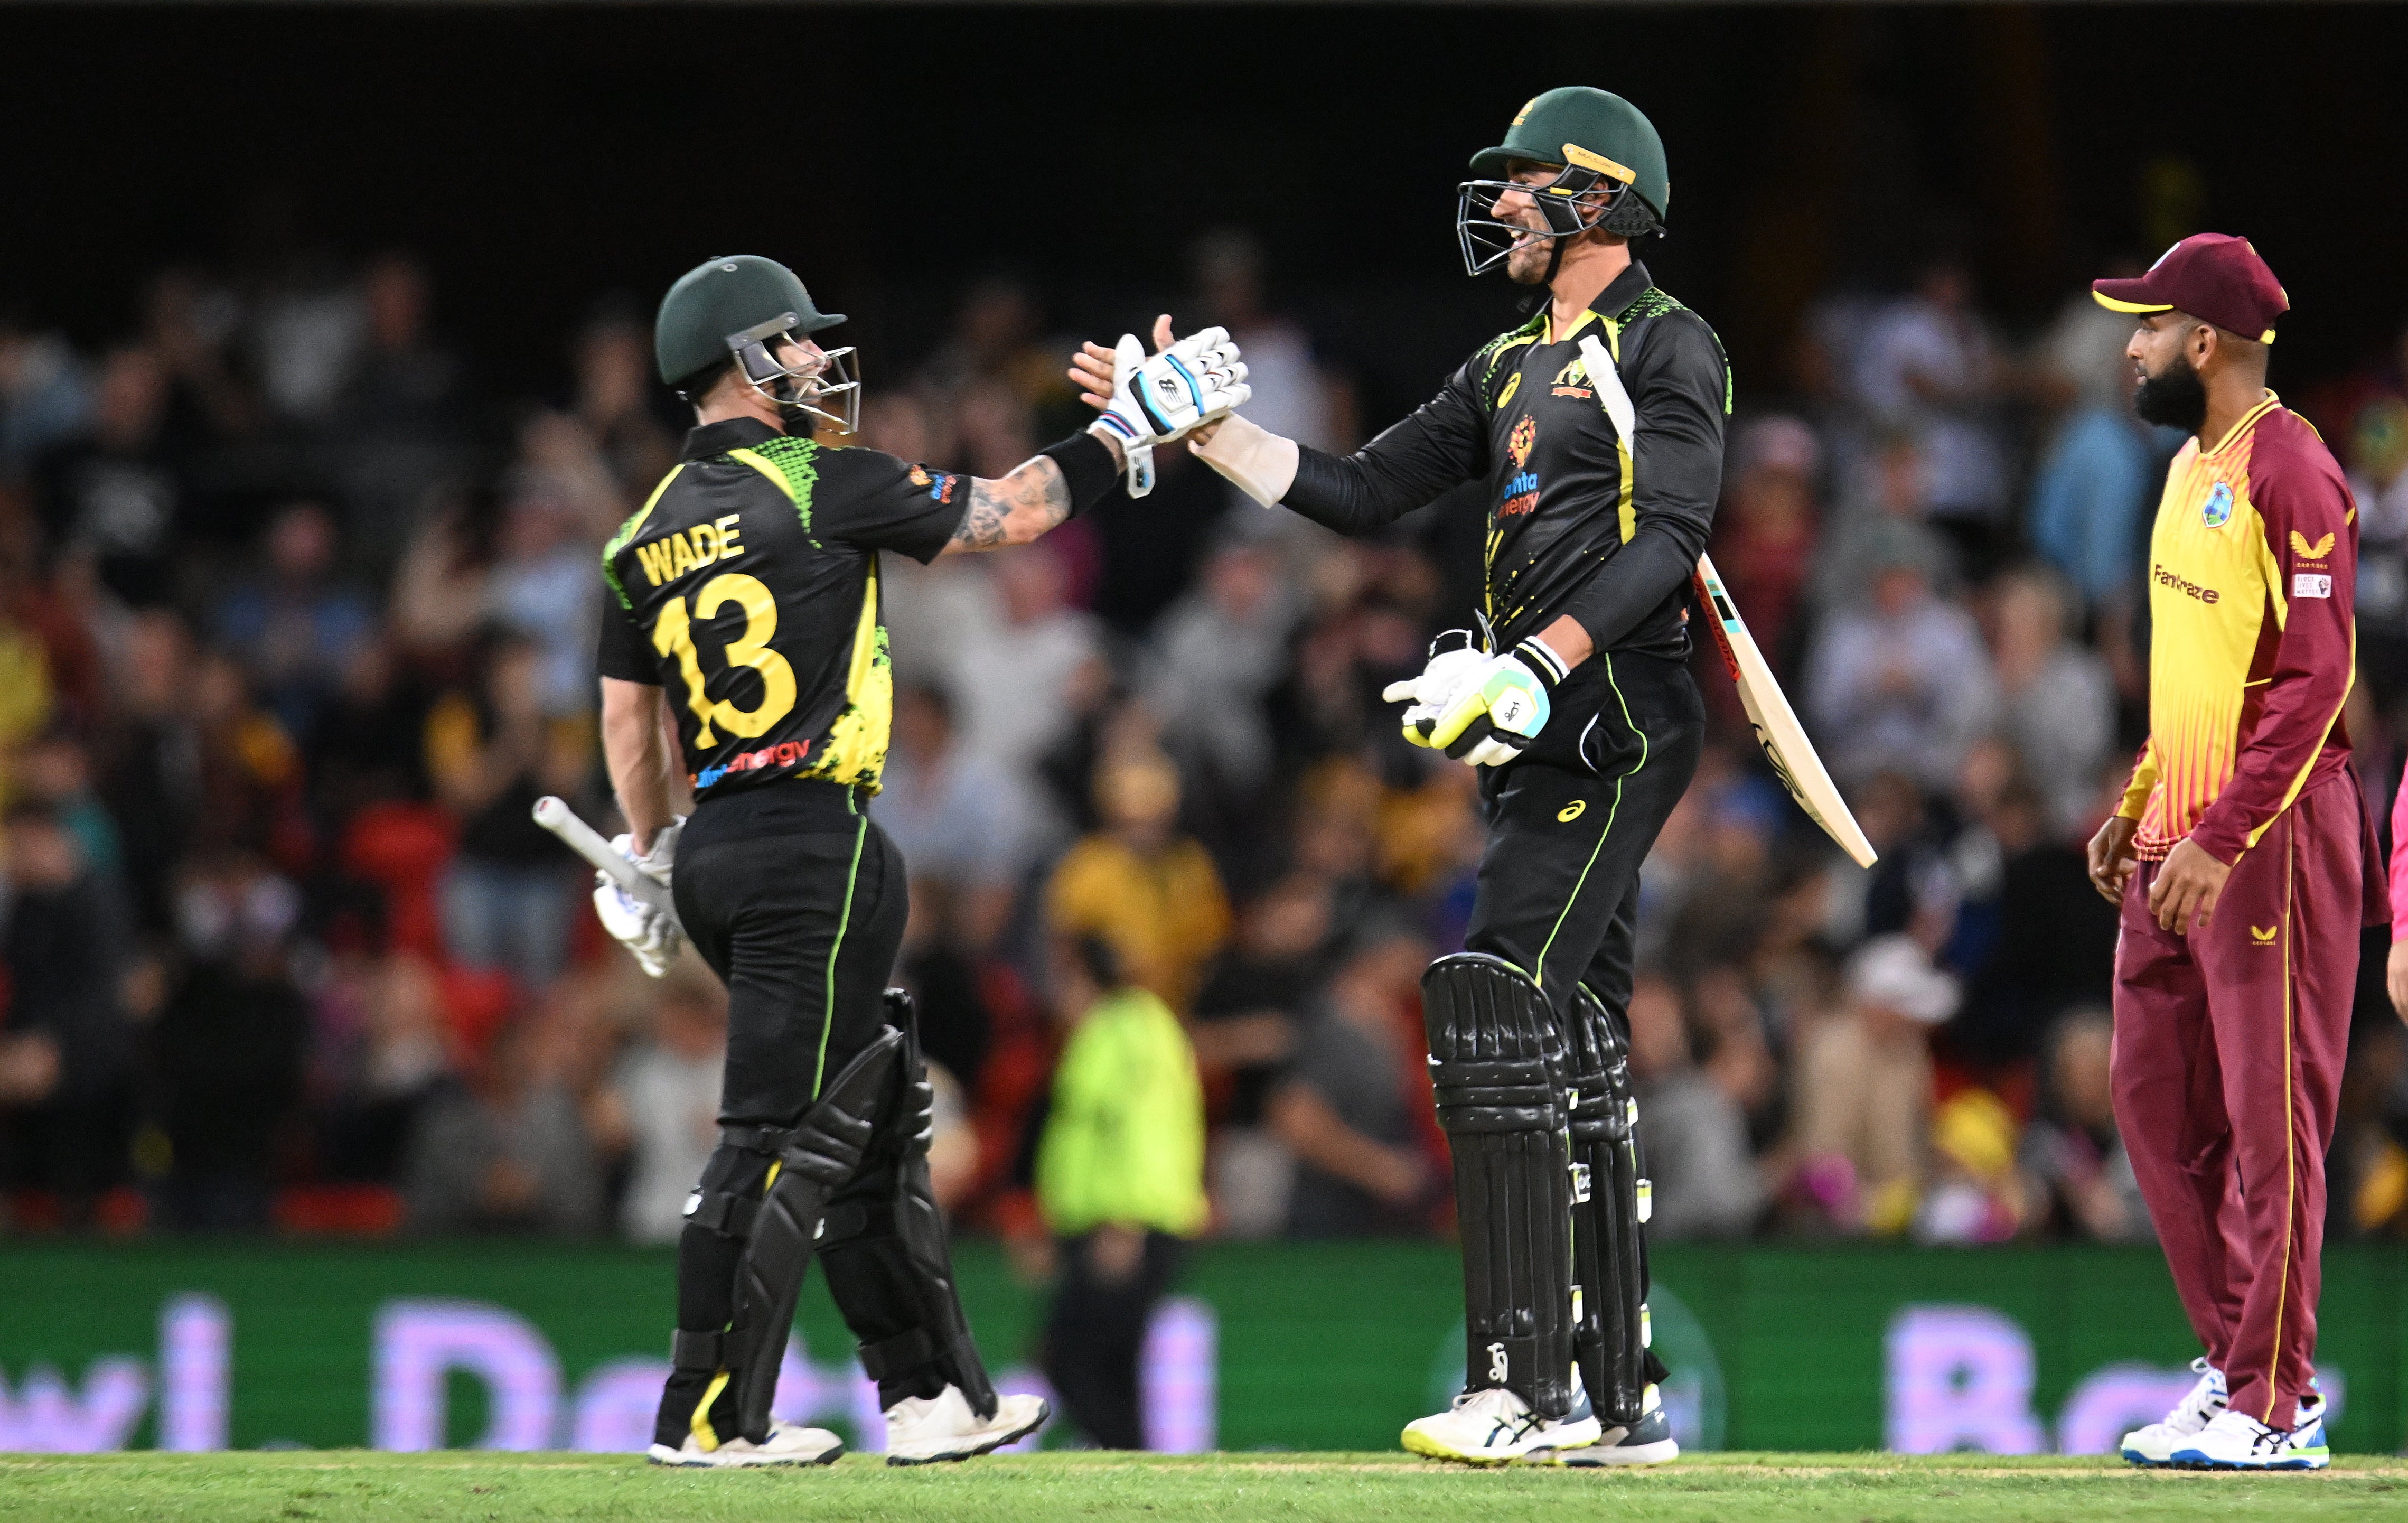 Mathew Wade’s unbeaten 39 proved decisive in a three-wicket win